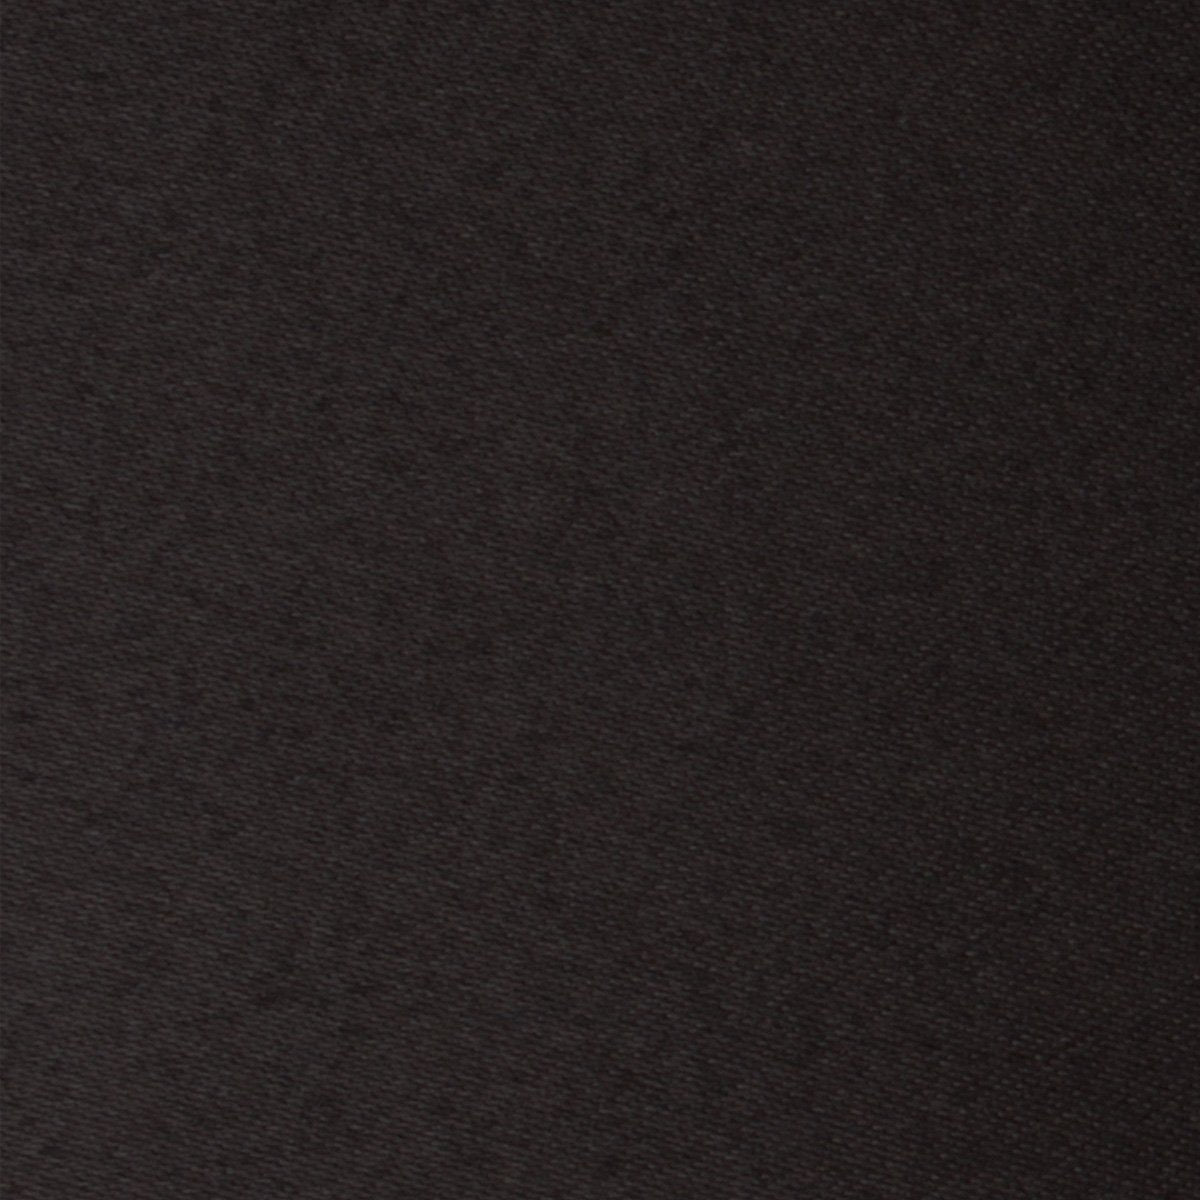 Dark Brown Truffle Satin Pocket Square Fabric